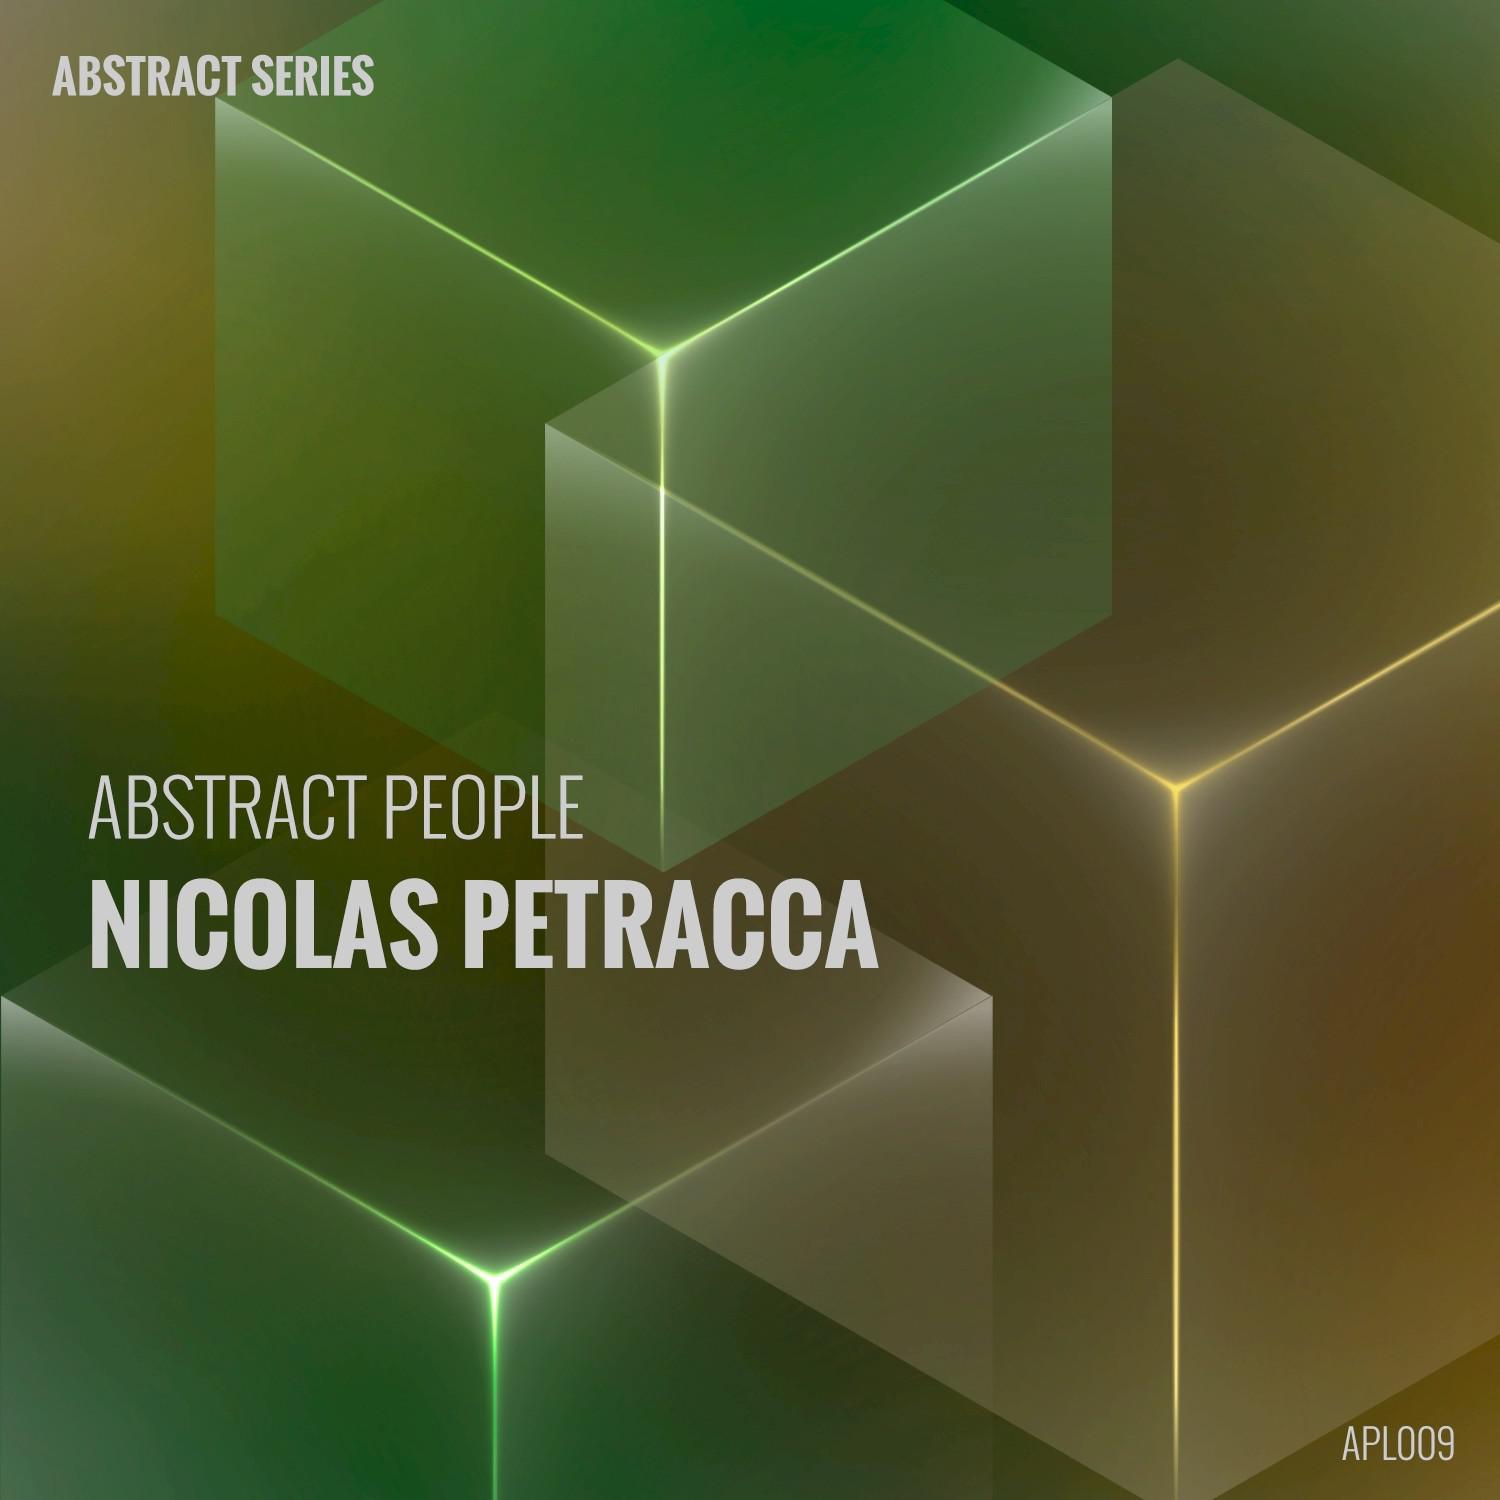 Abstract People: Nicolas Petracca